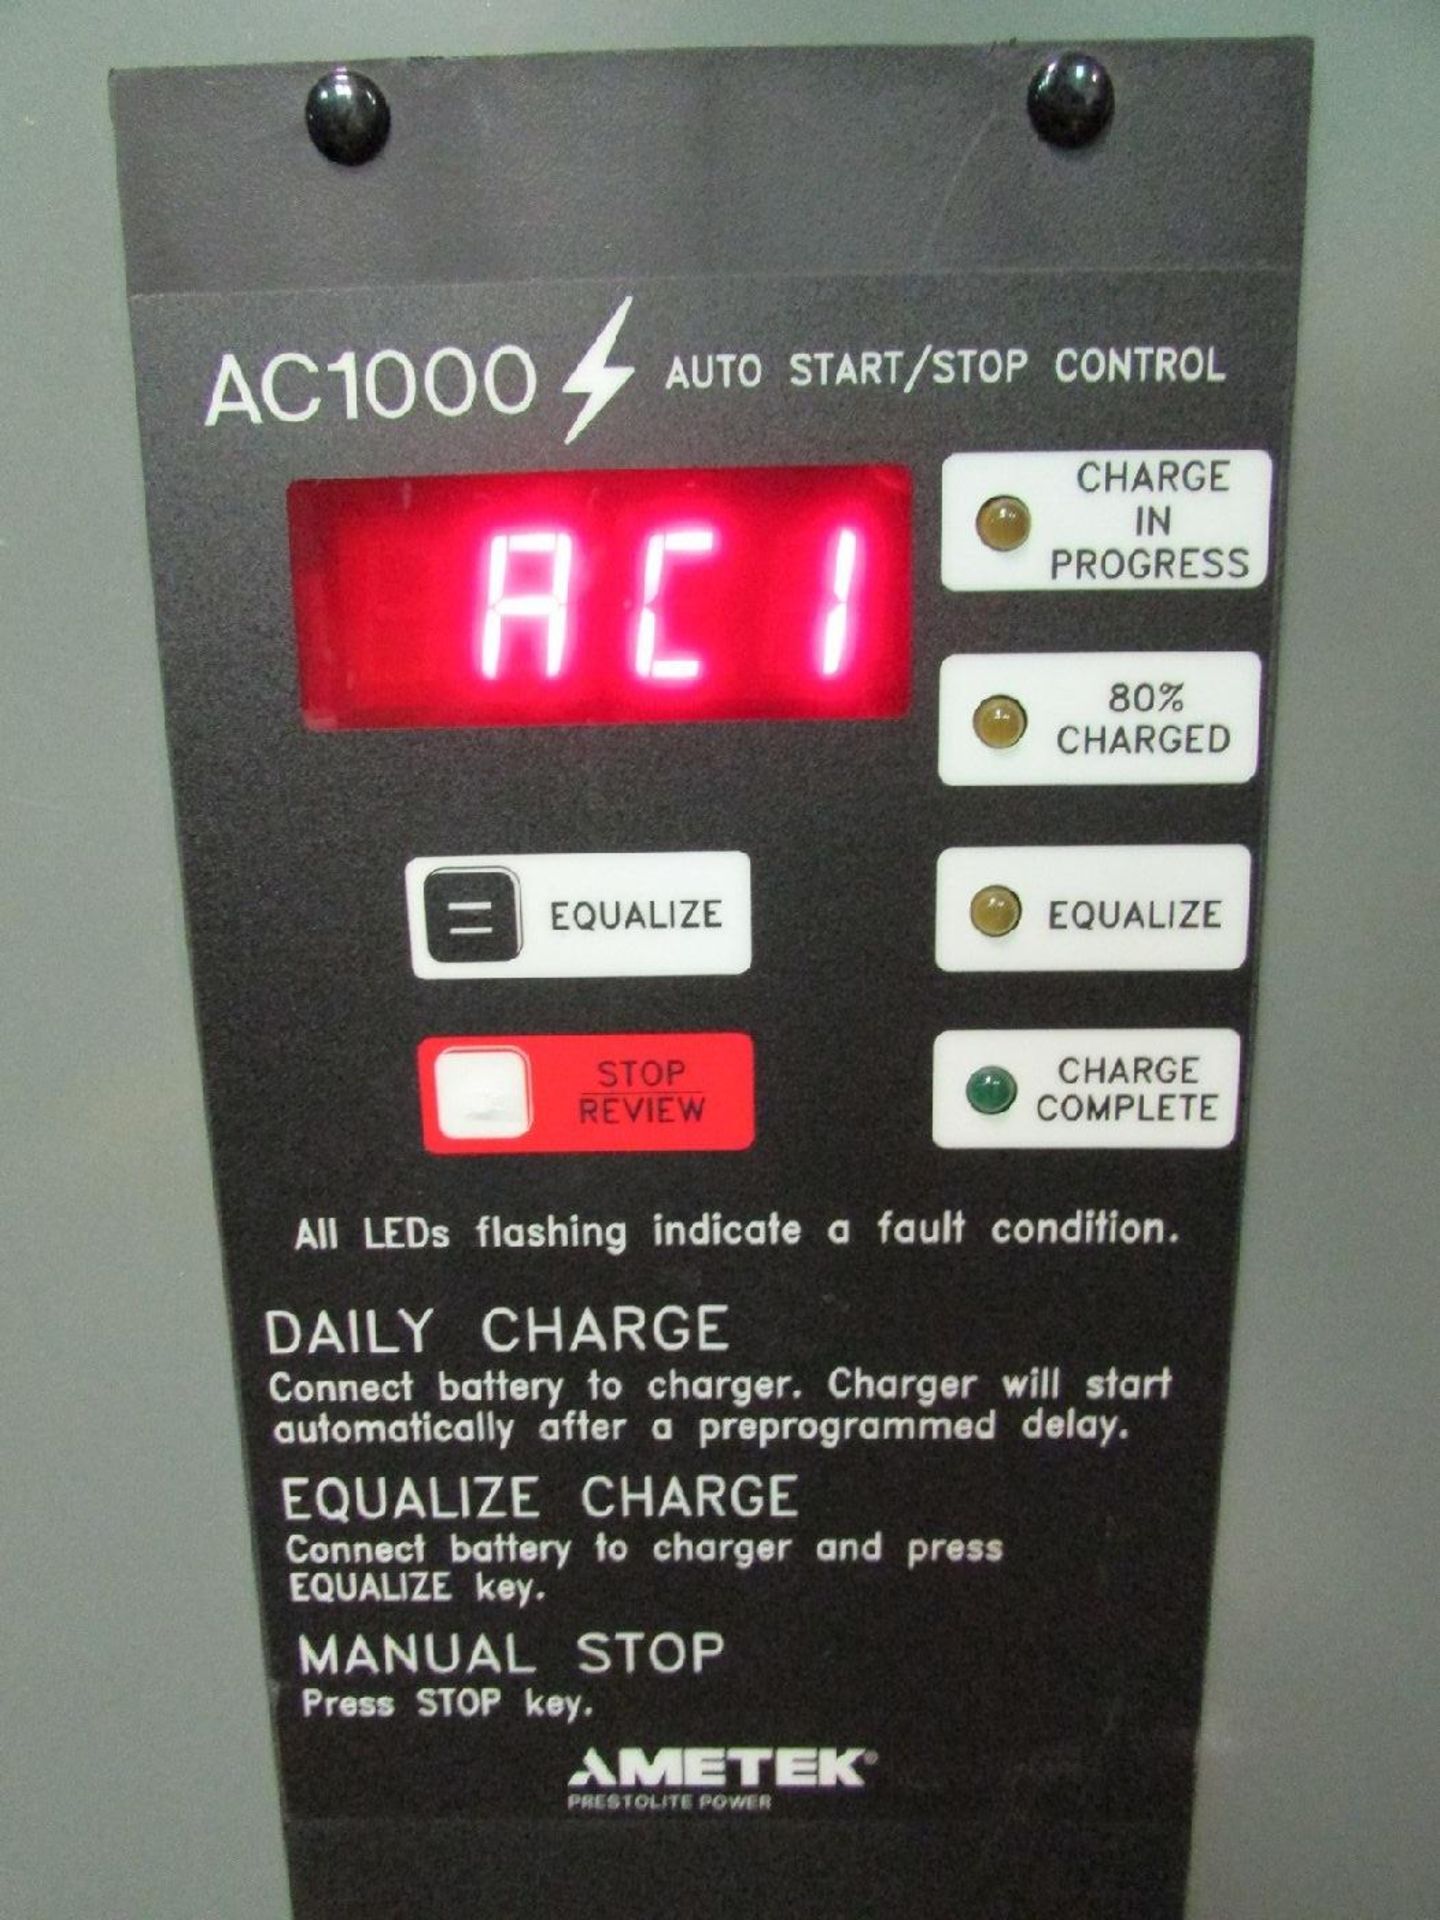 Ametek Prestolite Power Model 880H3-18G 36V Battery Charger - Image 3 of 4